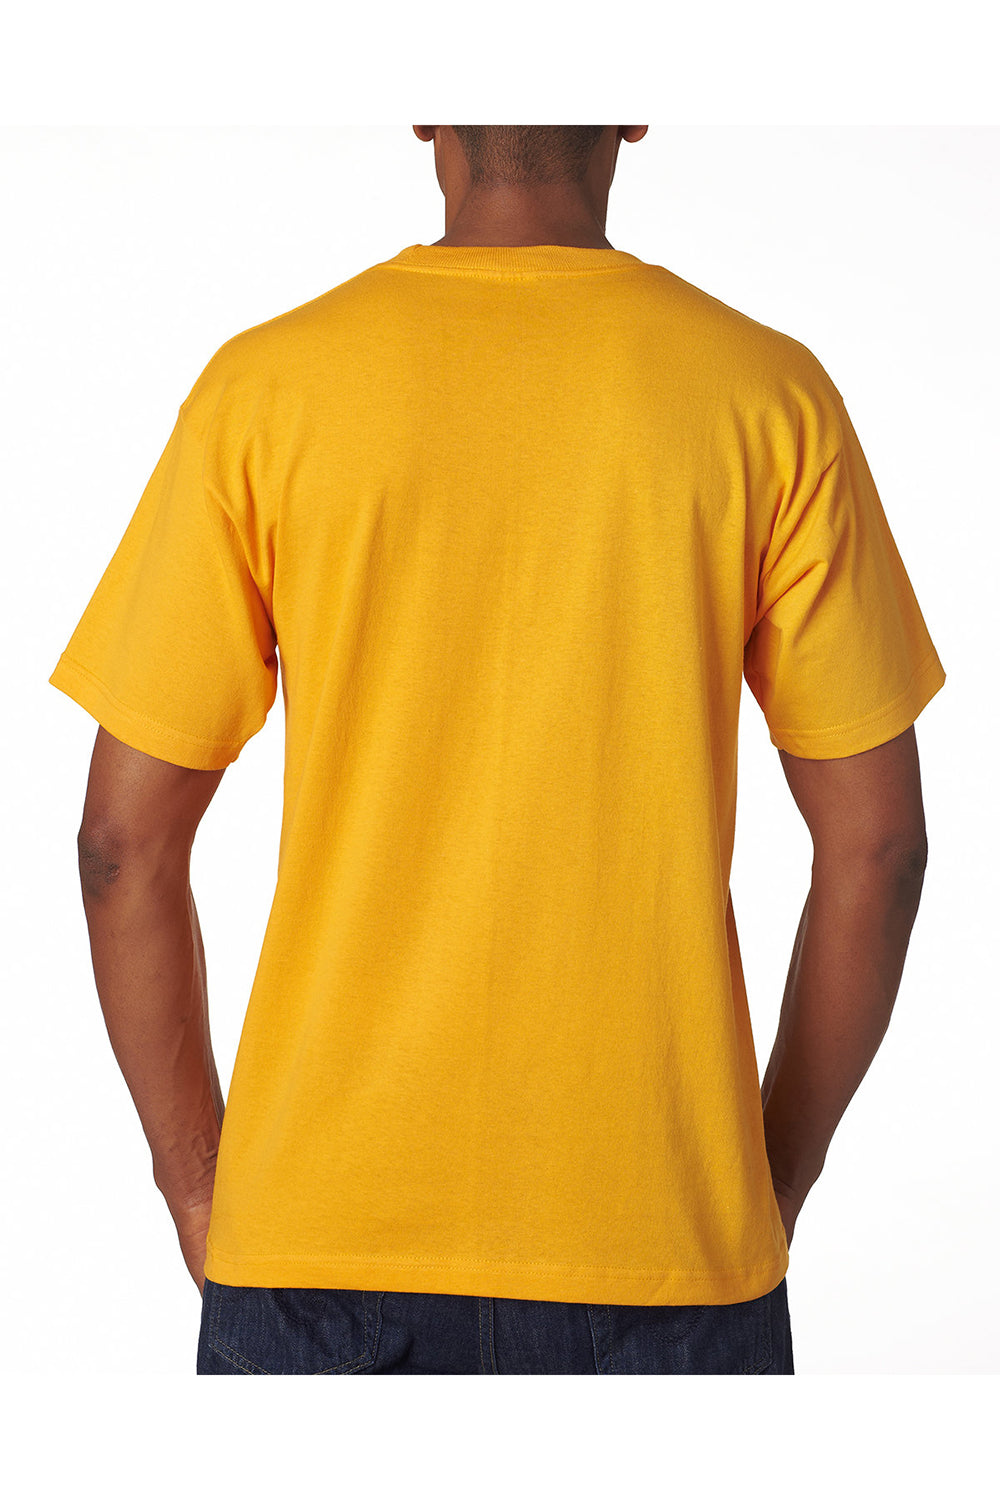 Bayside BA5100 Mens USA Made Short Sleeve Crewneck T-Shirt Gold Model Back